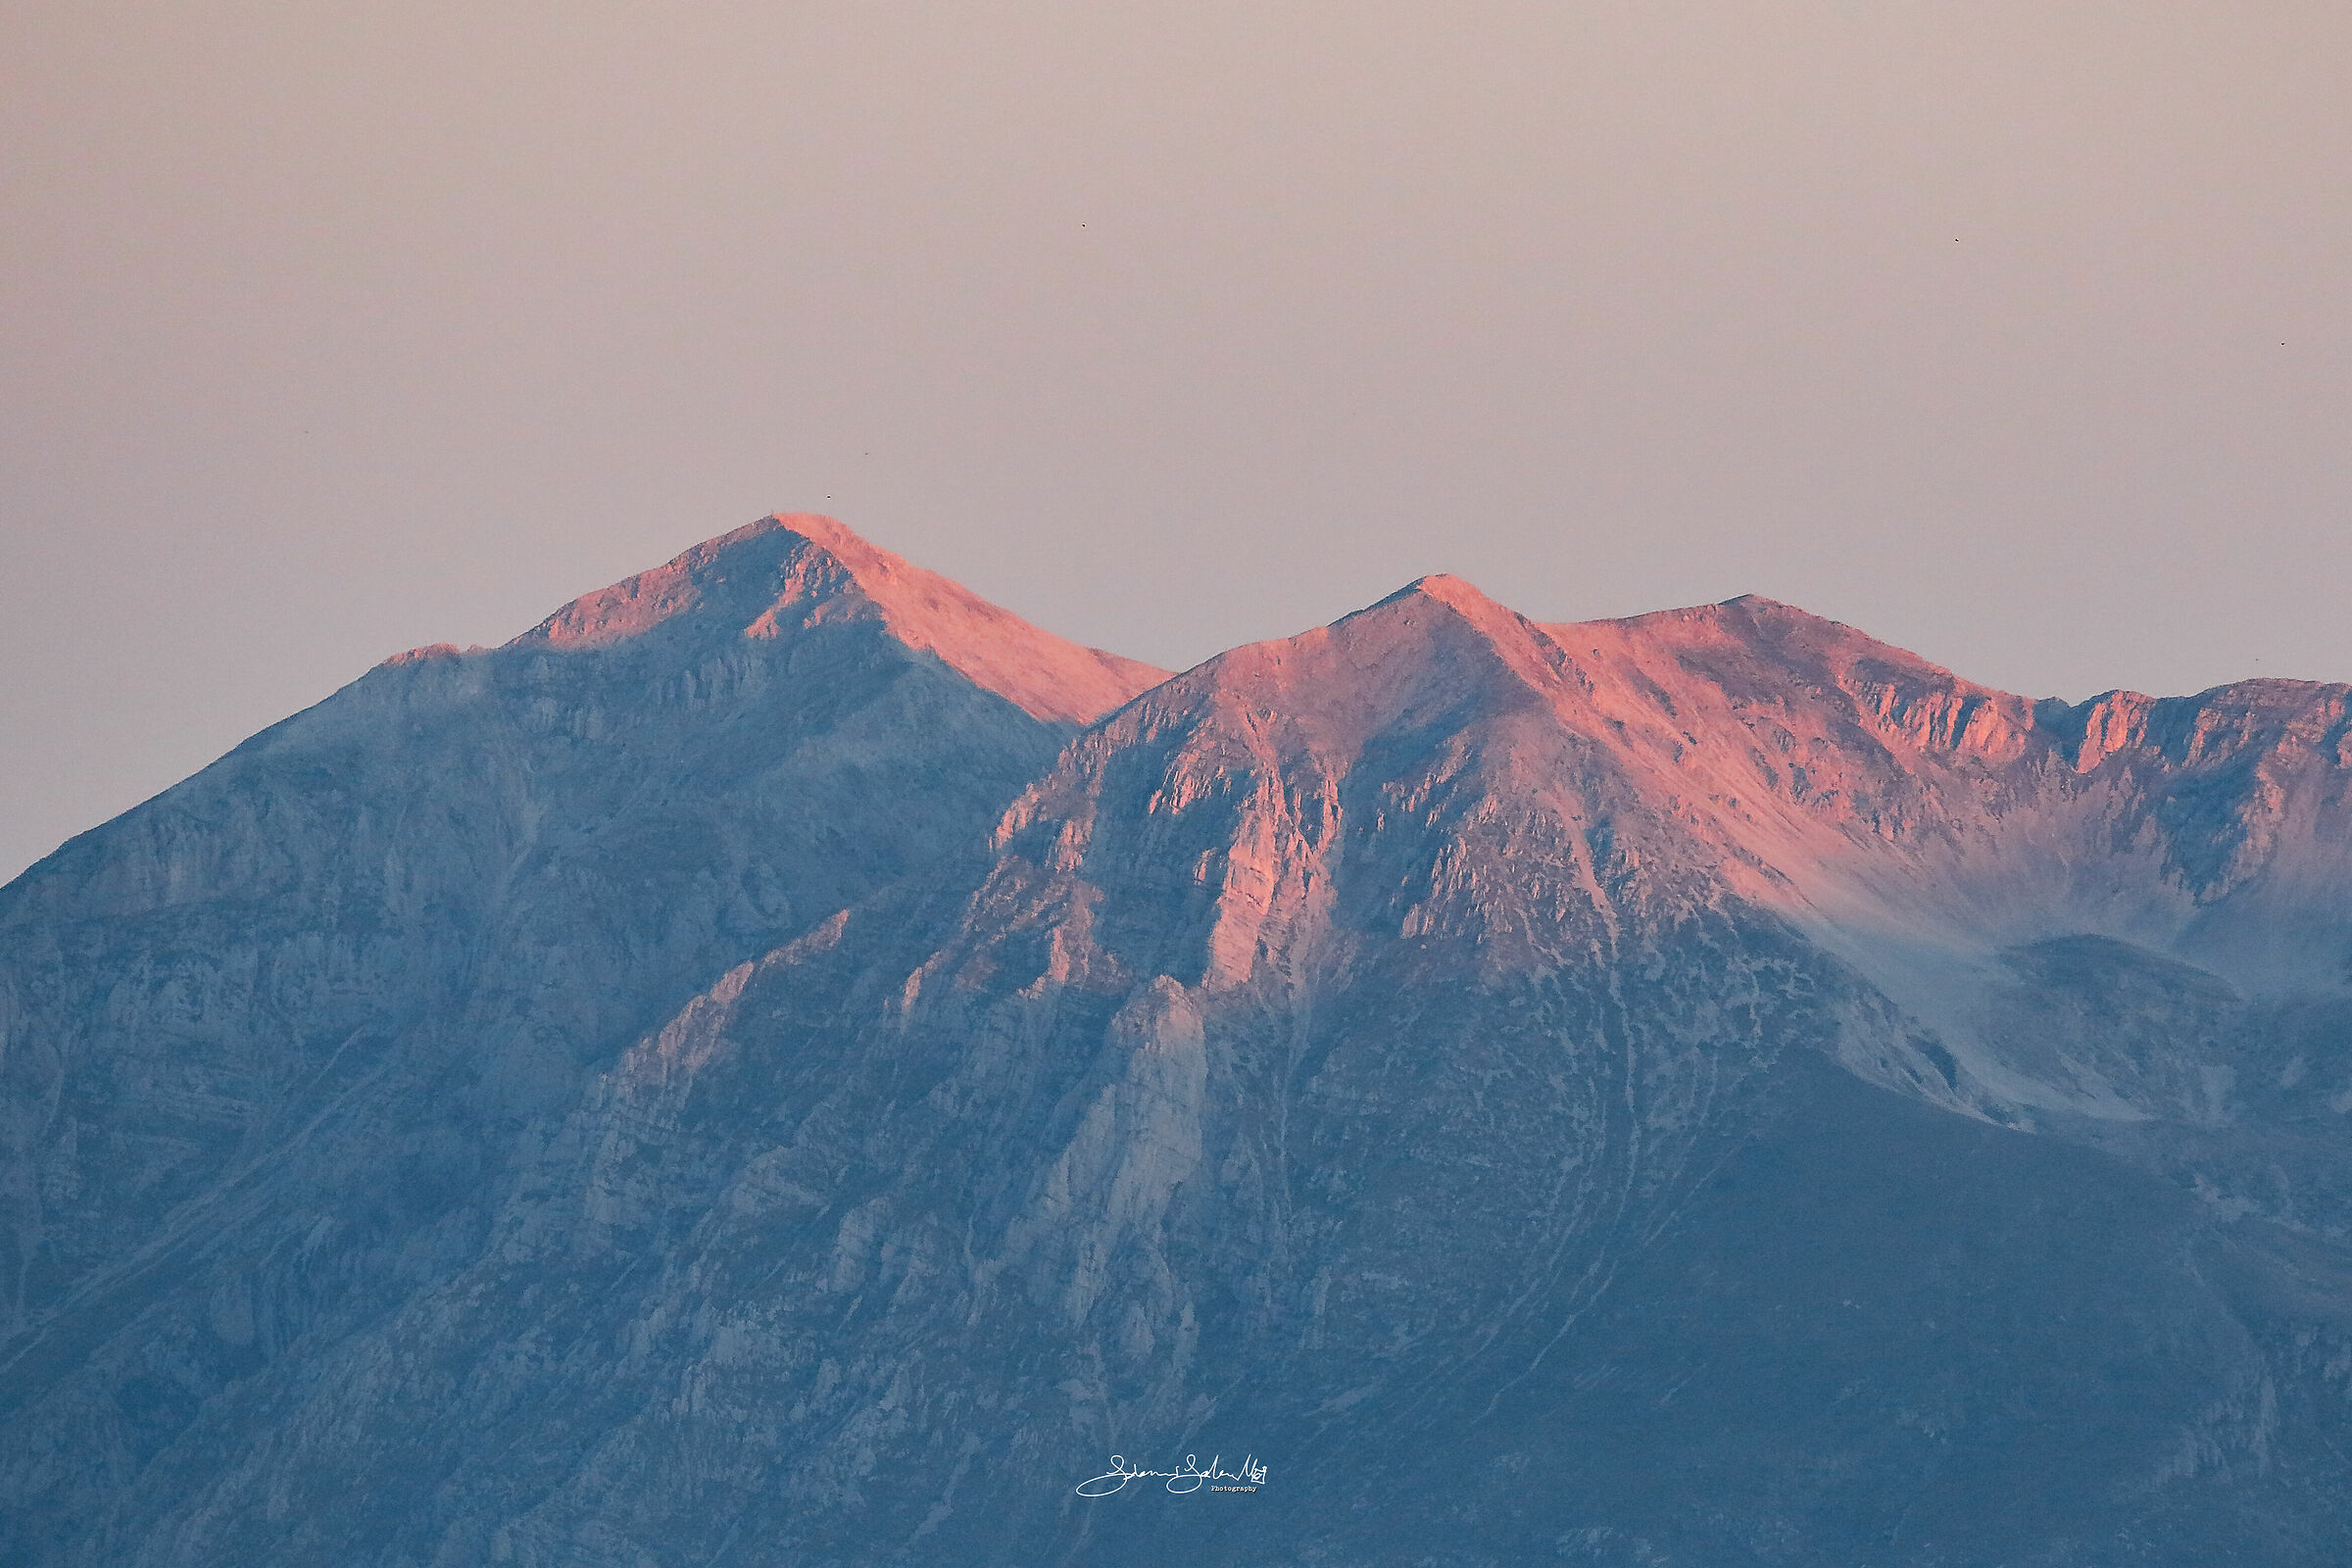 Sunrise on Velino Mountain (2487m s.l.m.)...